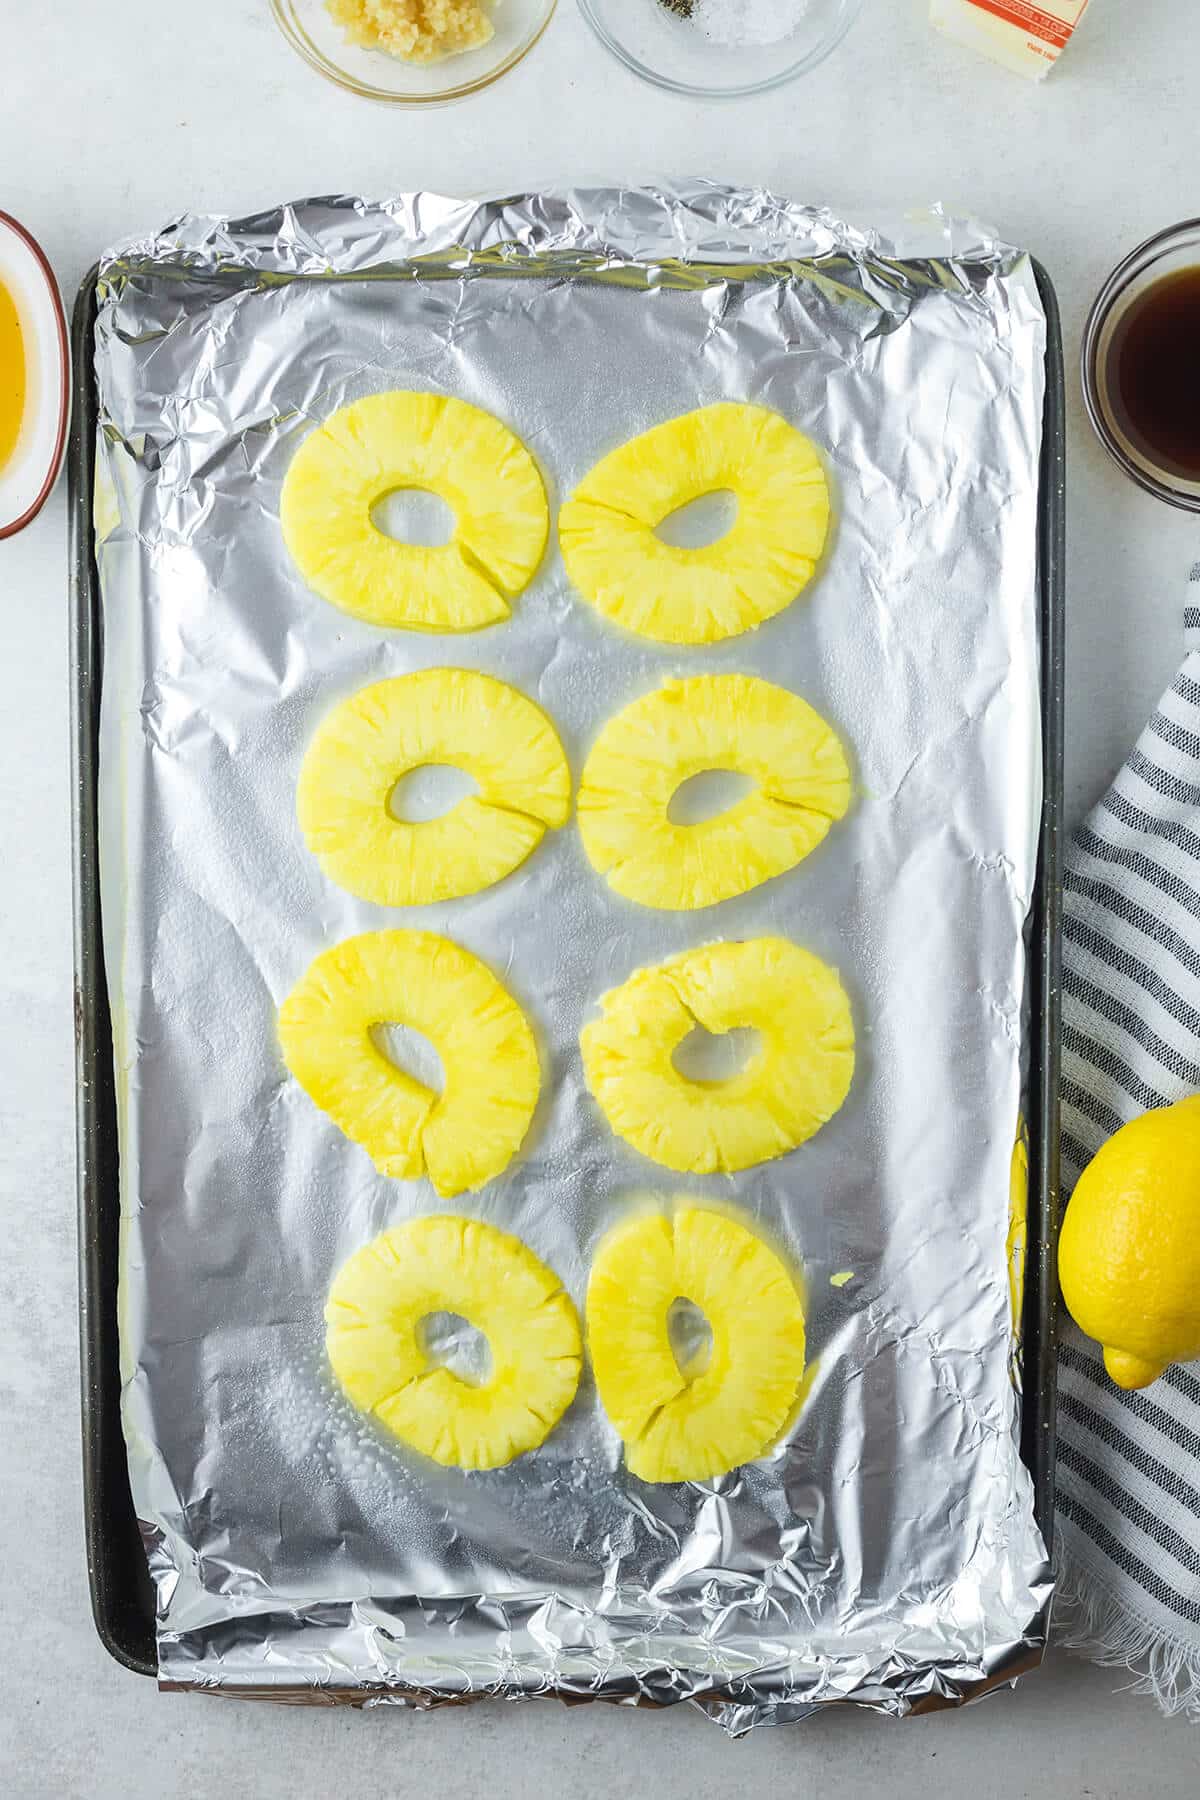 pineapple rings on the baking sheet.